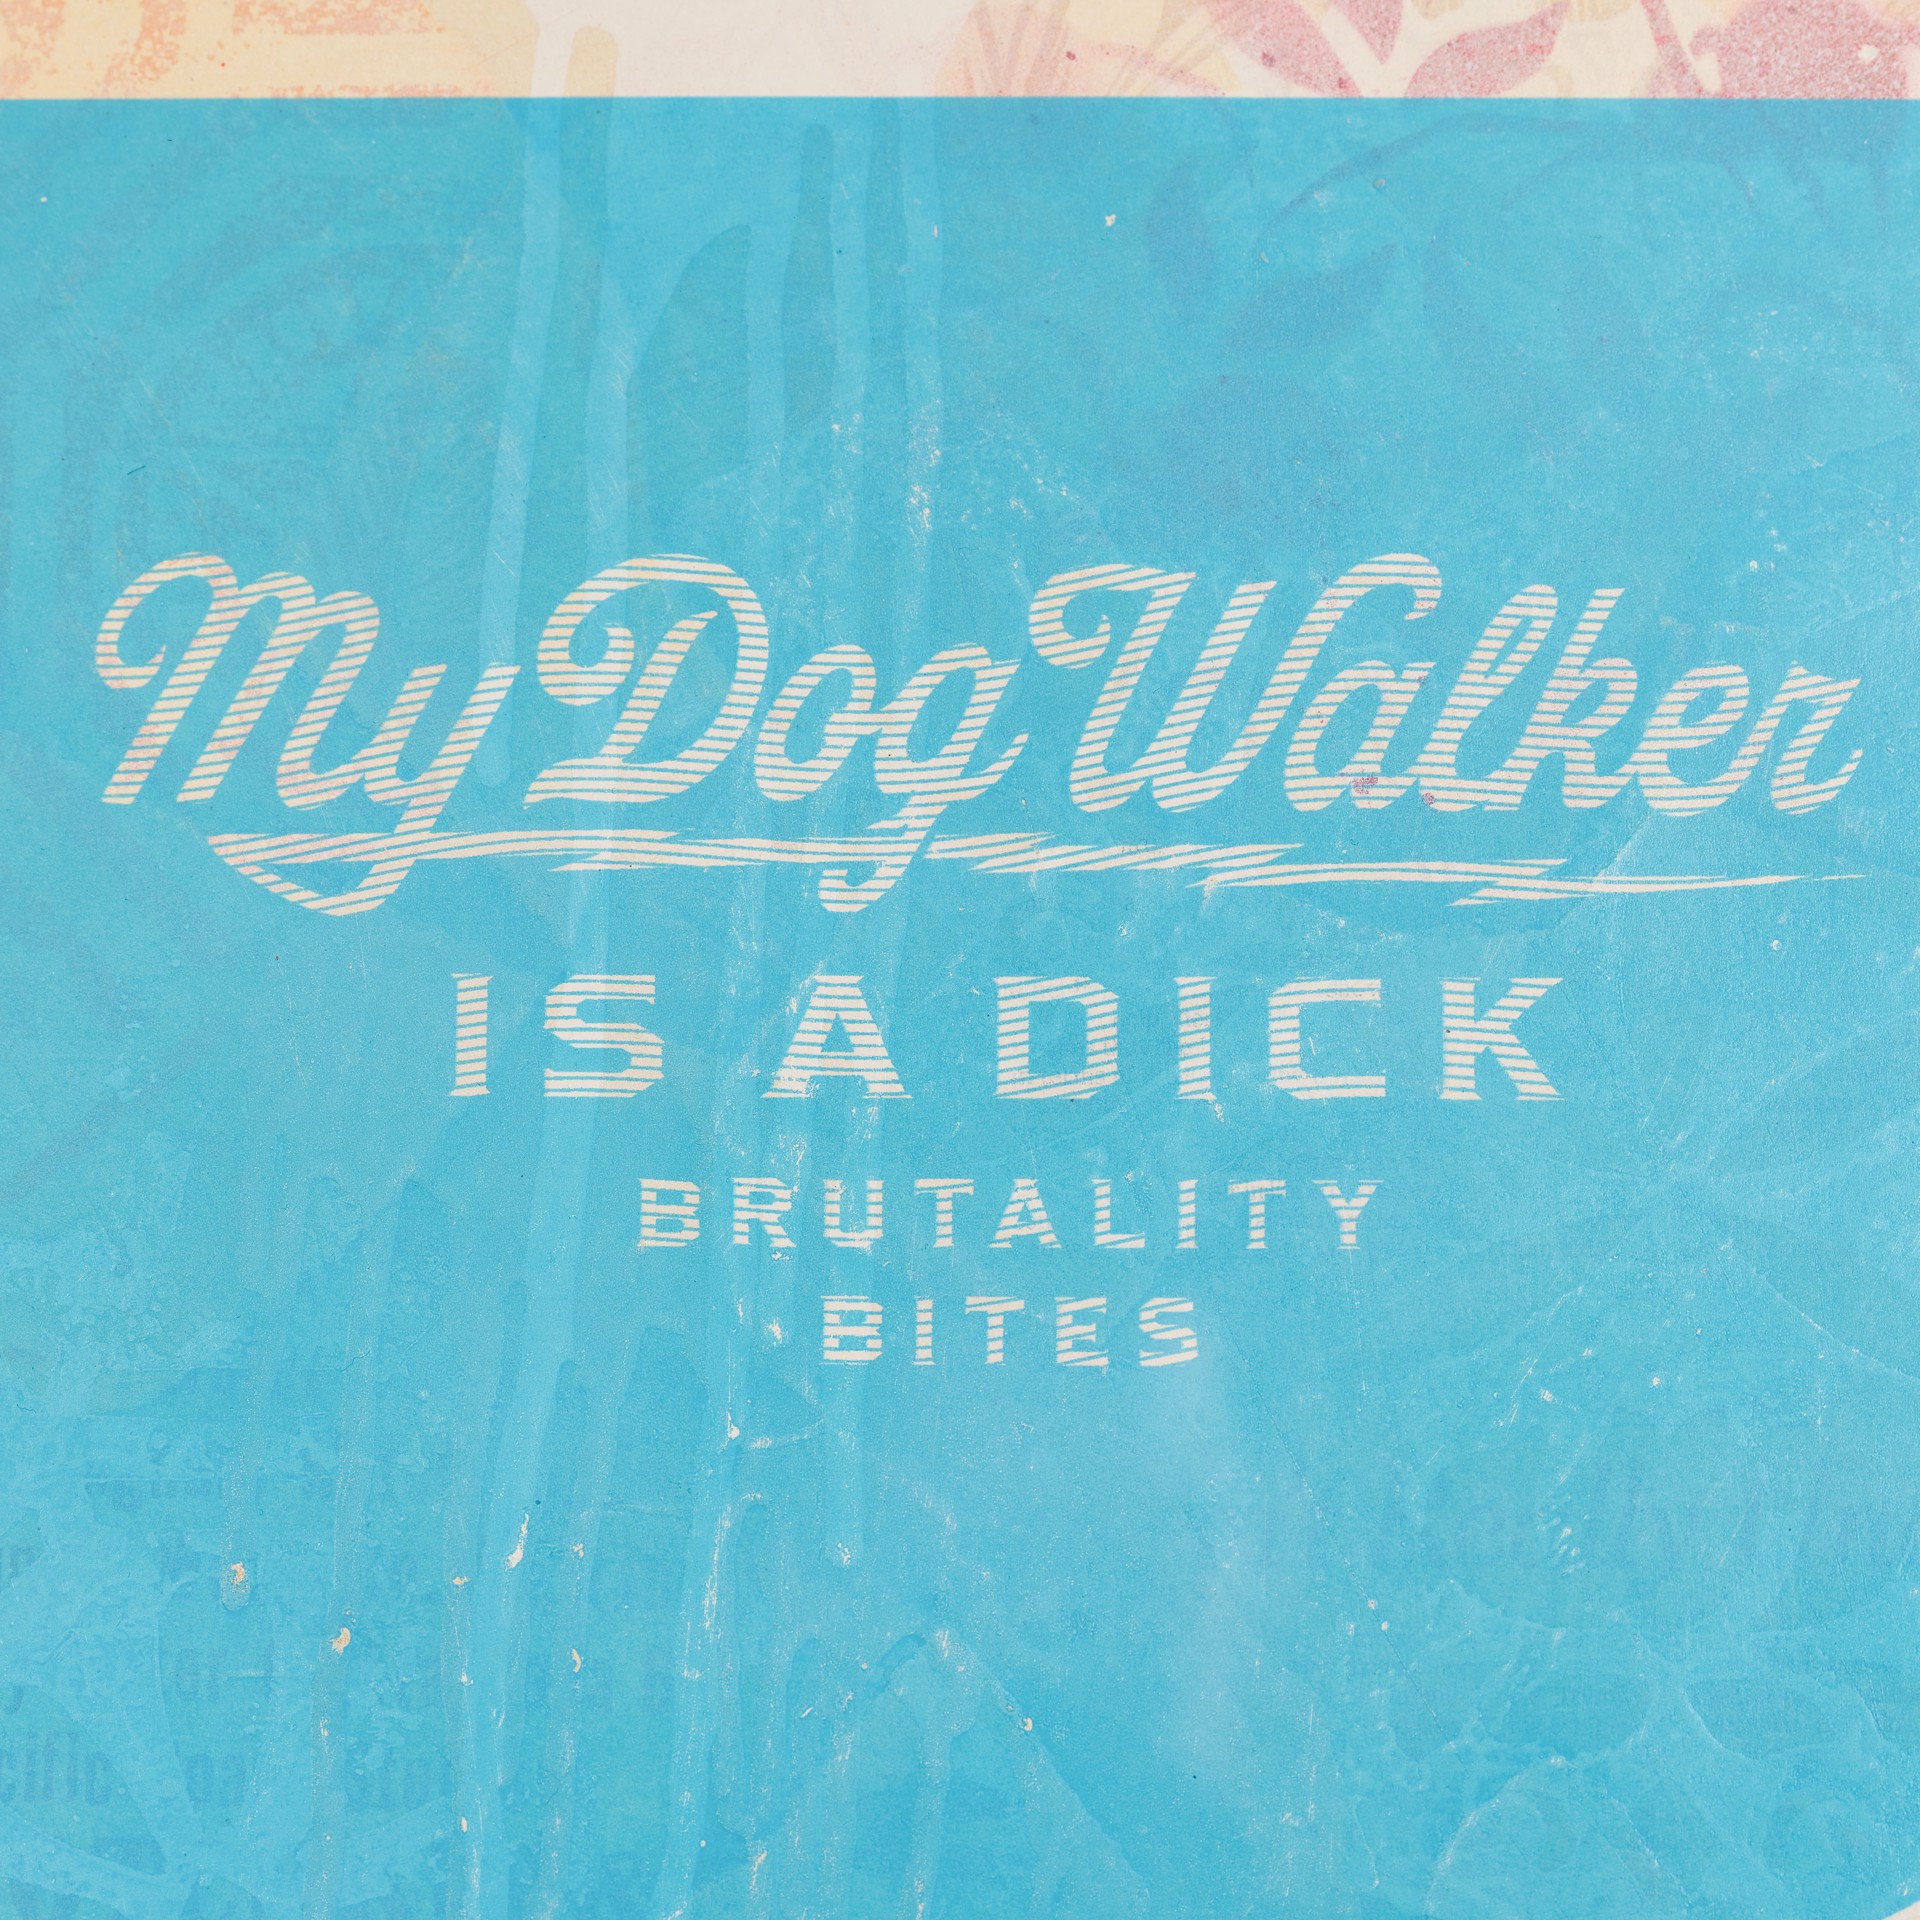 Sadistic Dog Walker (Blue) by Shepard Fairey / Limited editions